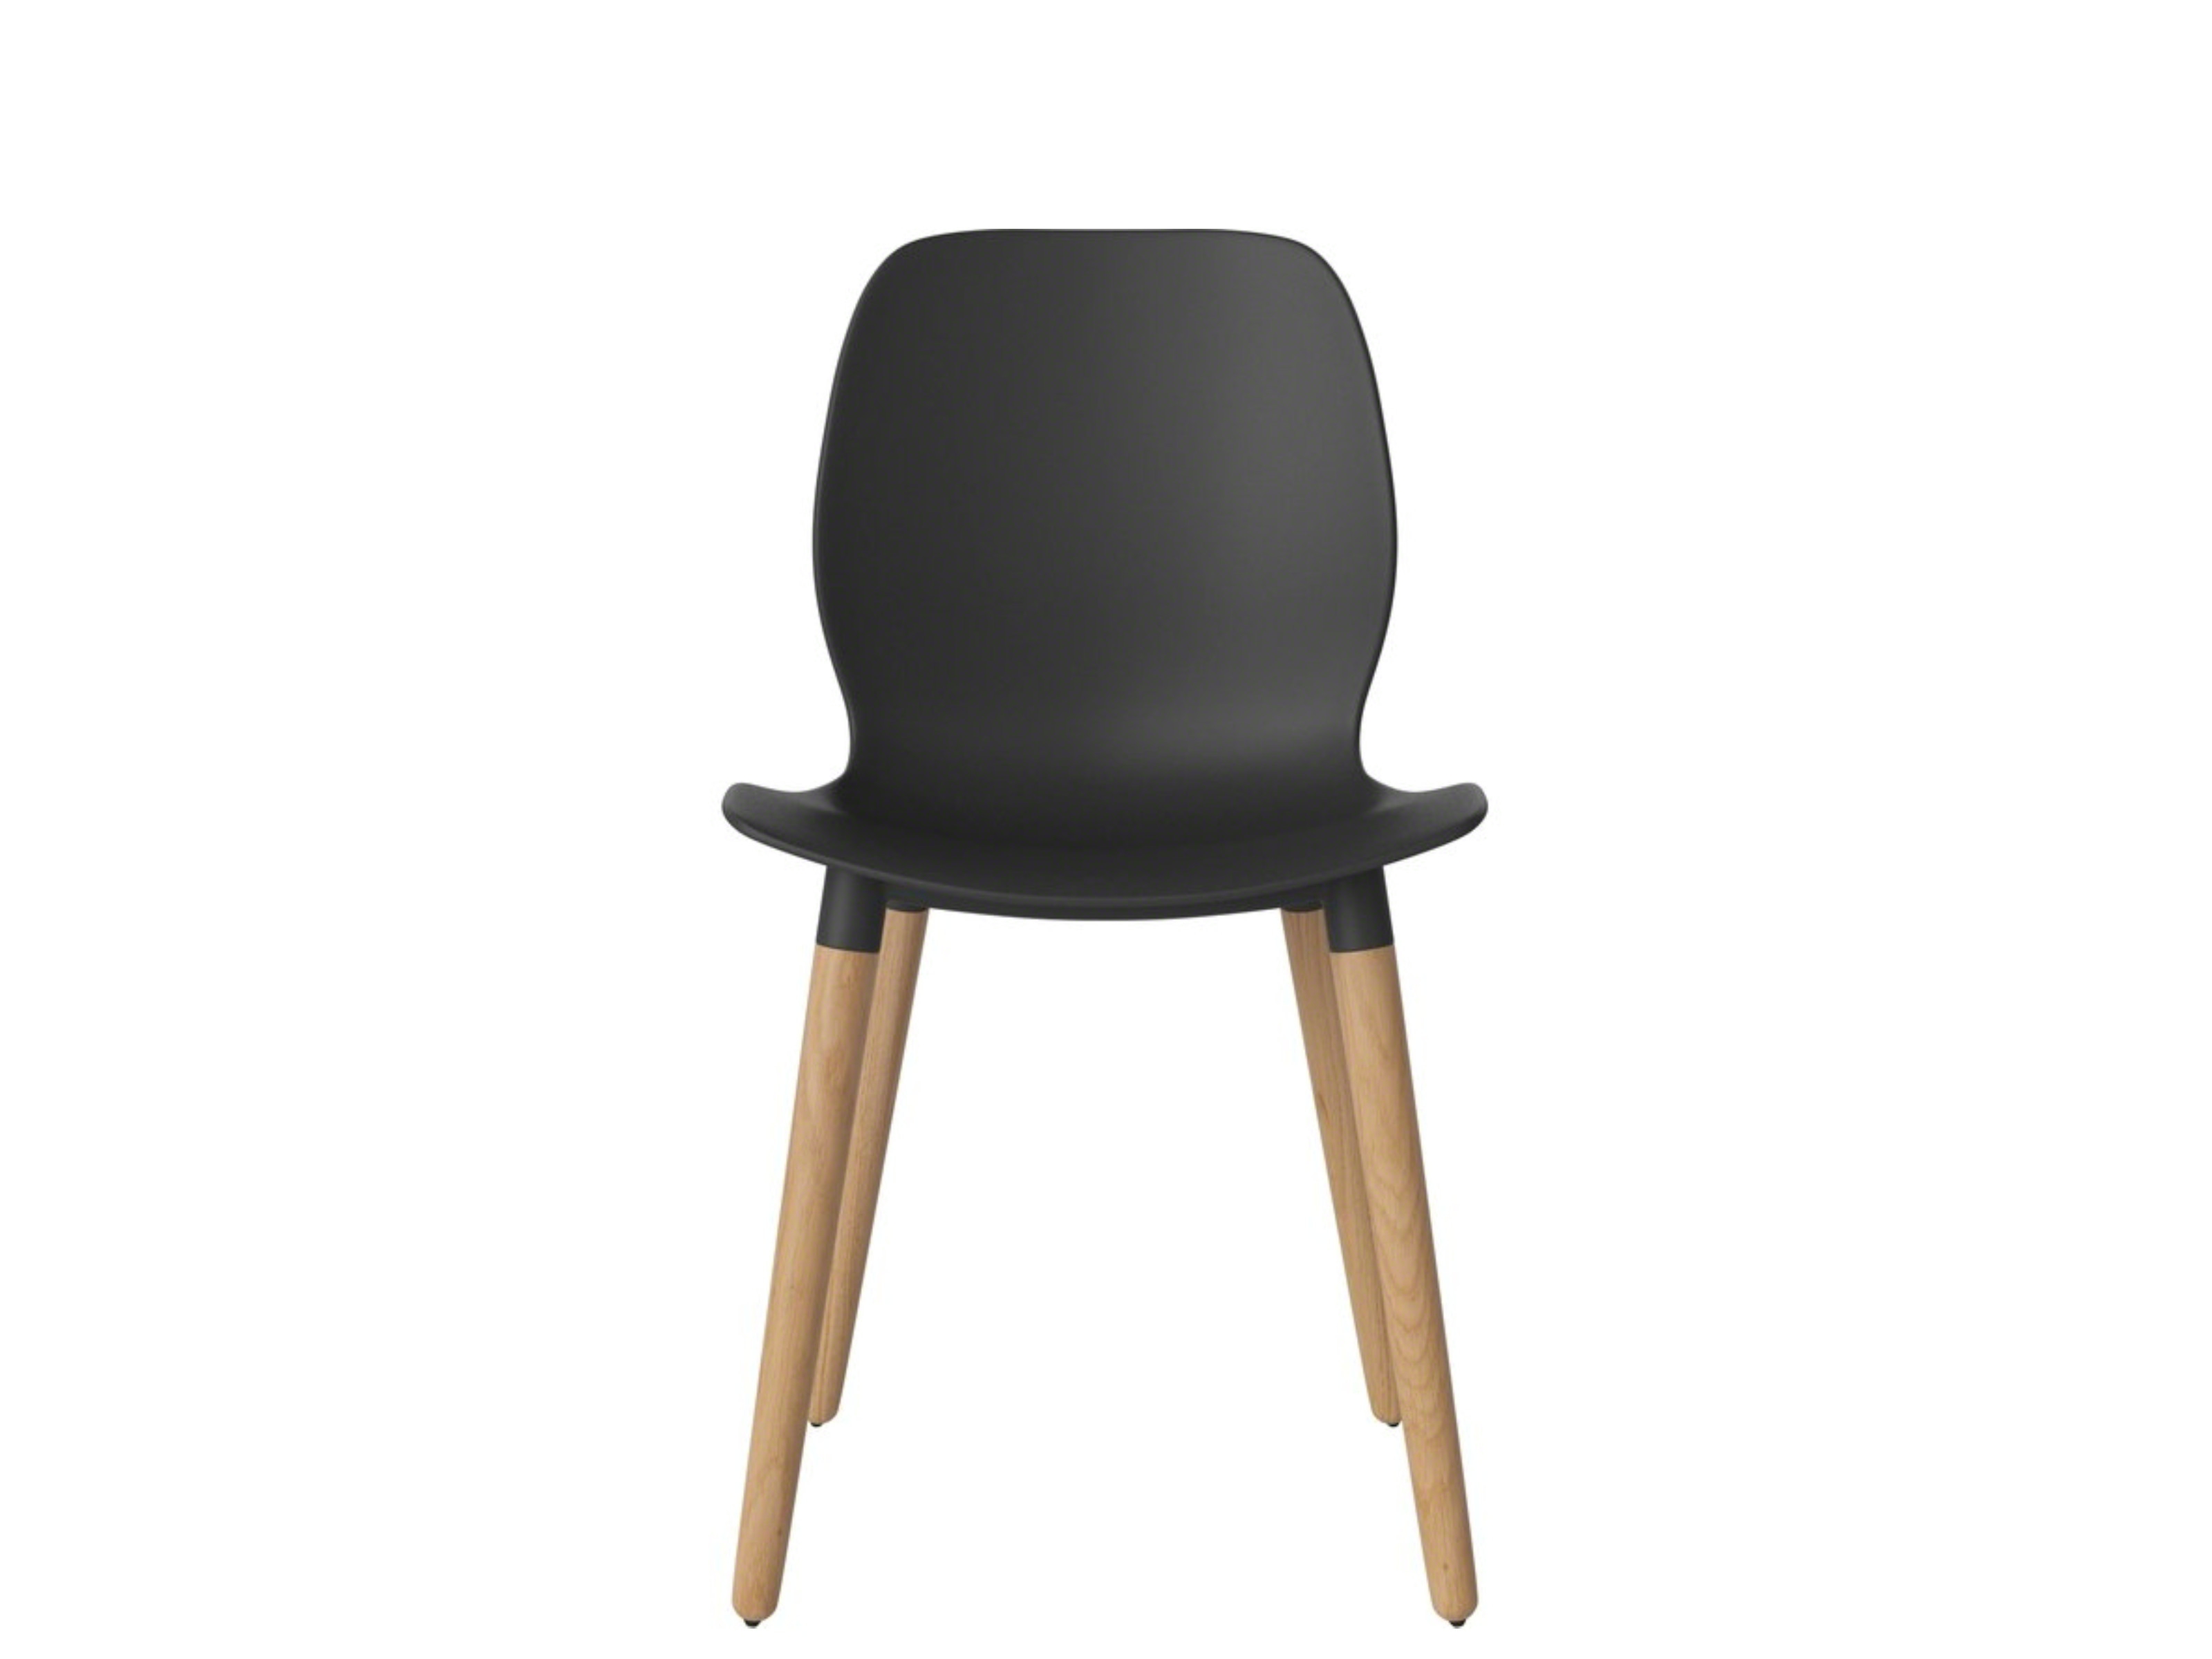 Seed chair-Polypropylene/wood legs